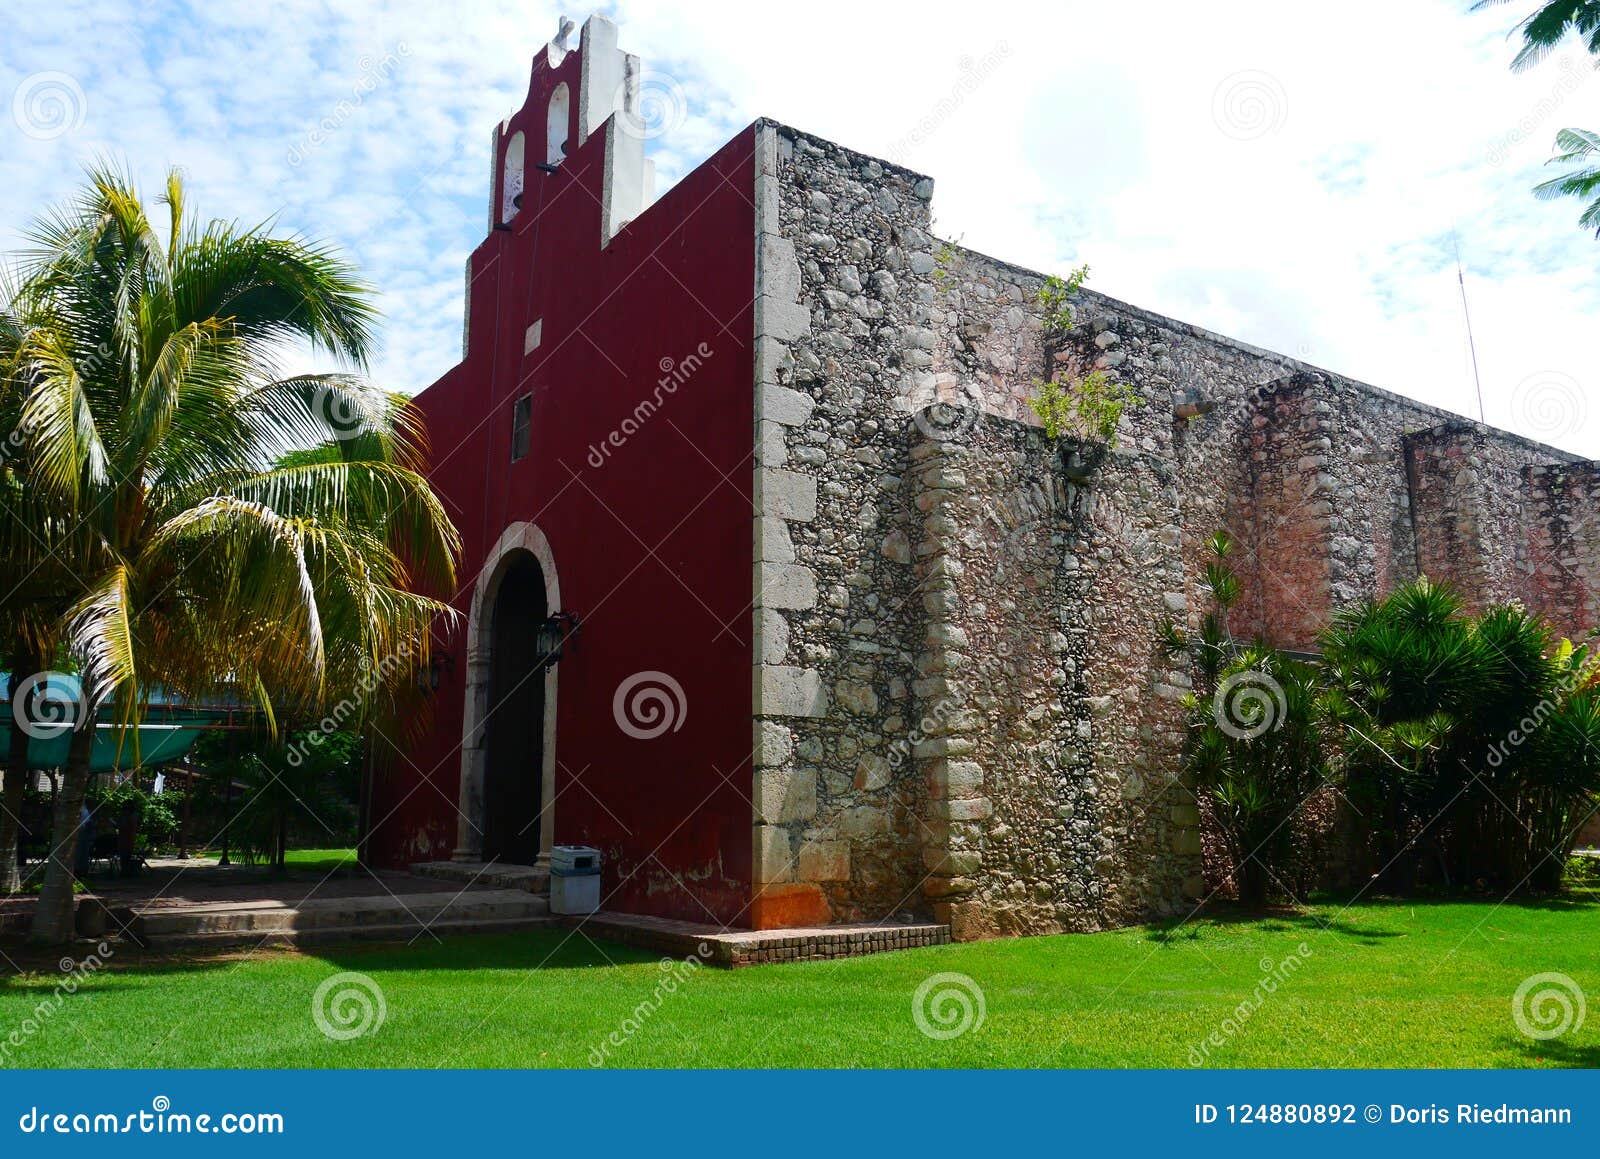 mexican church merida churbunacolonial architecture historia